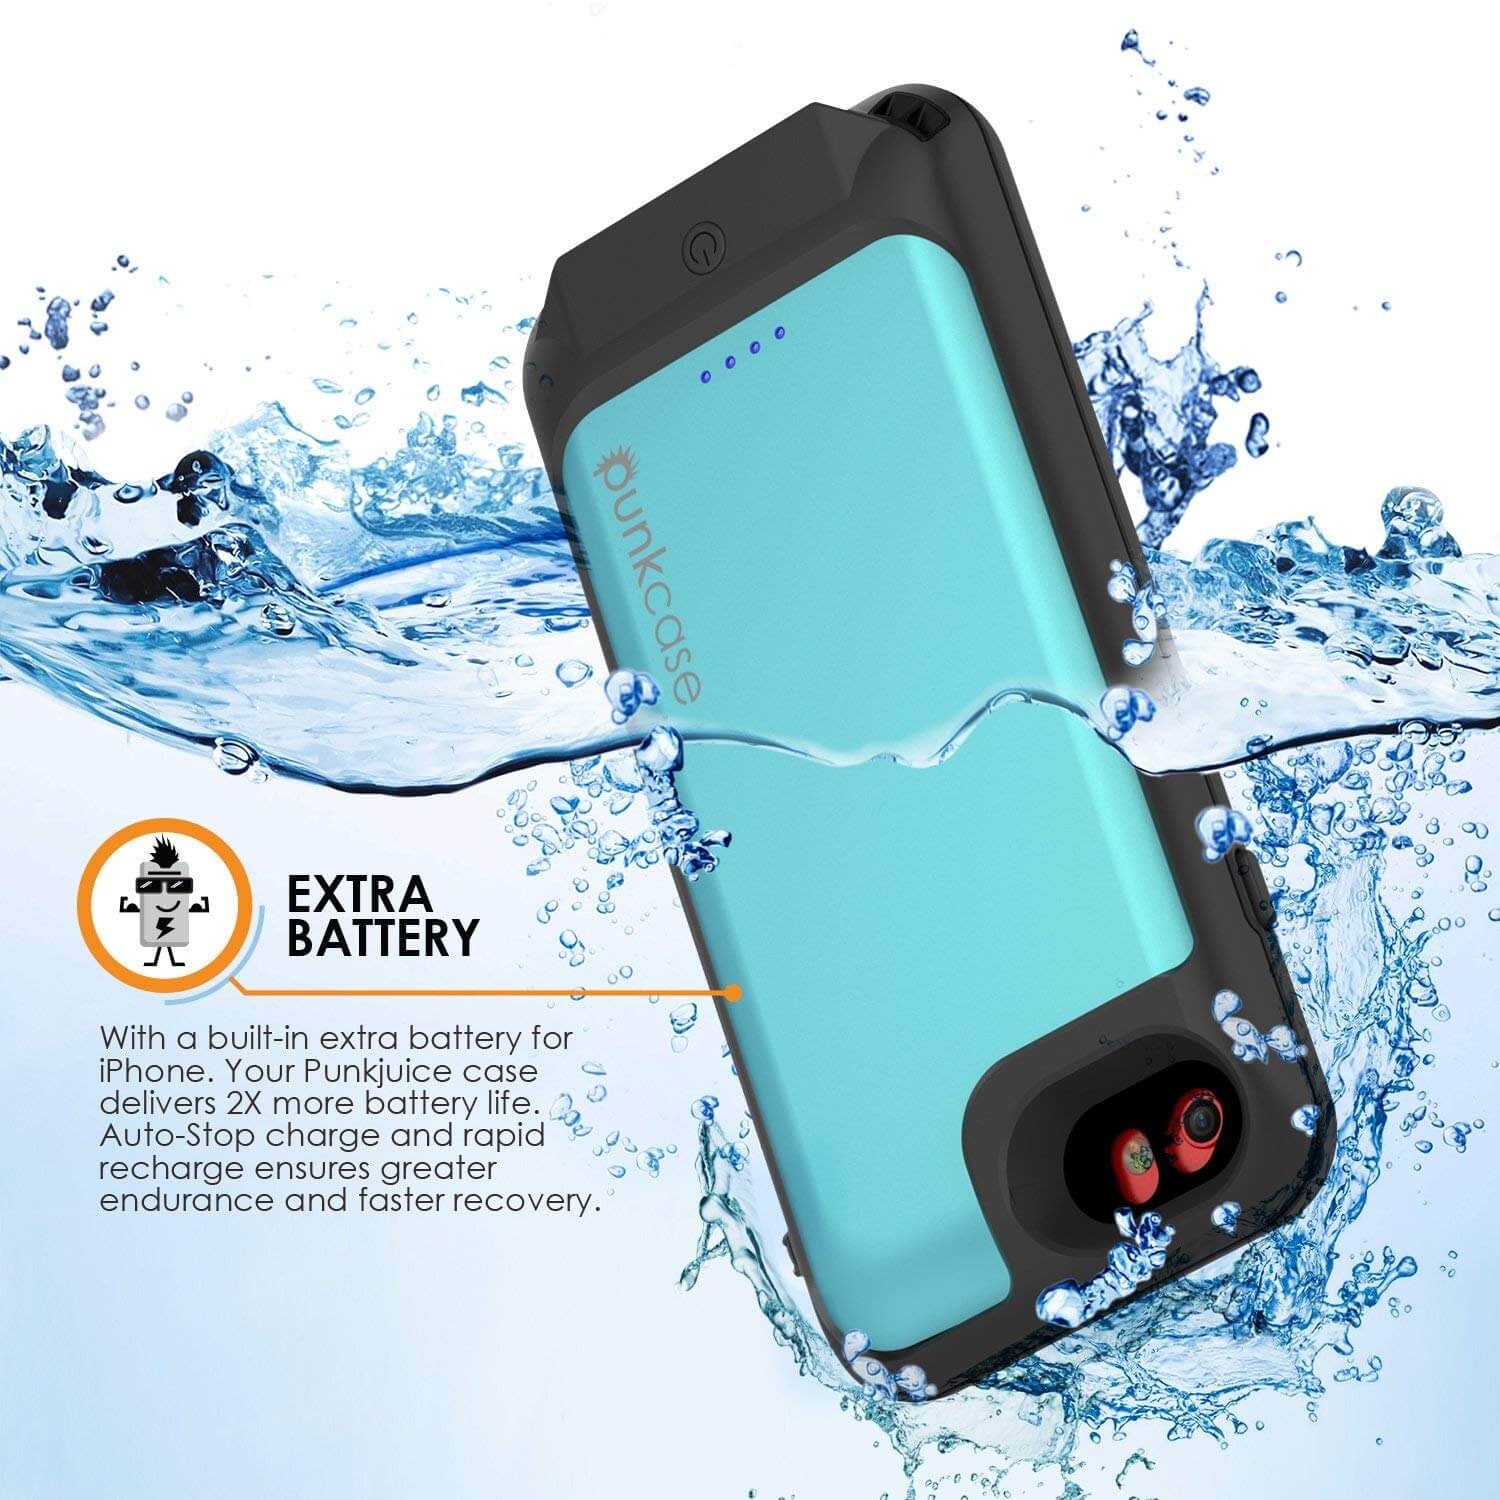 PunkJuice iPhone 8/7 Battery Case Teal - Waterproof Slim Power Juice Bank with 2750mAh